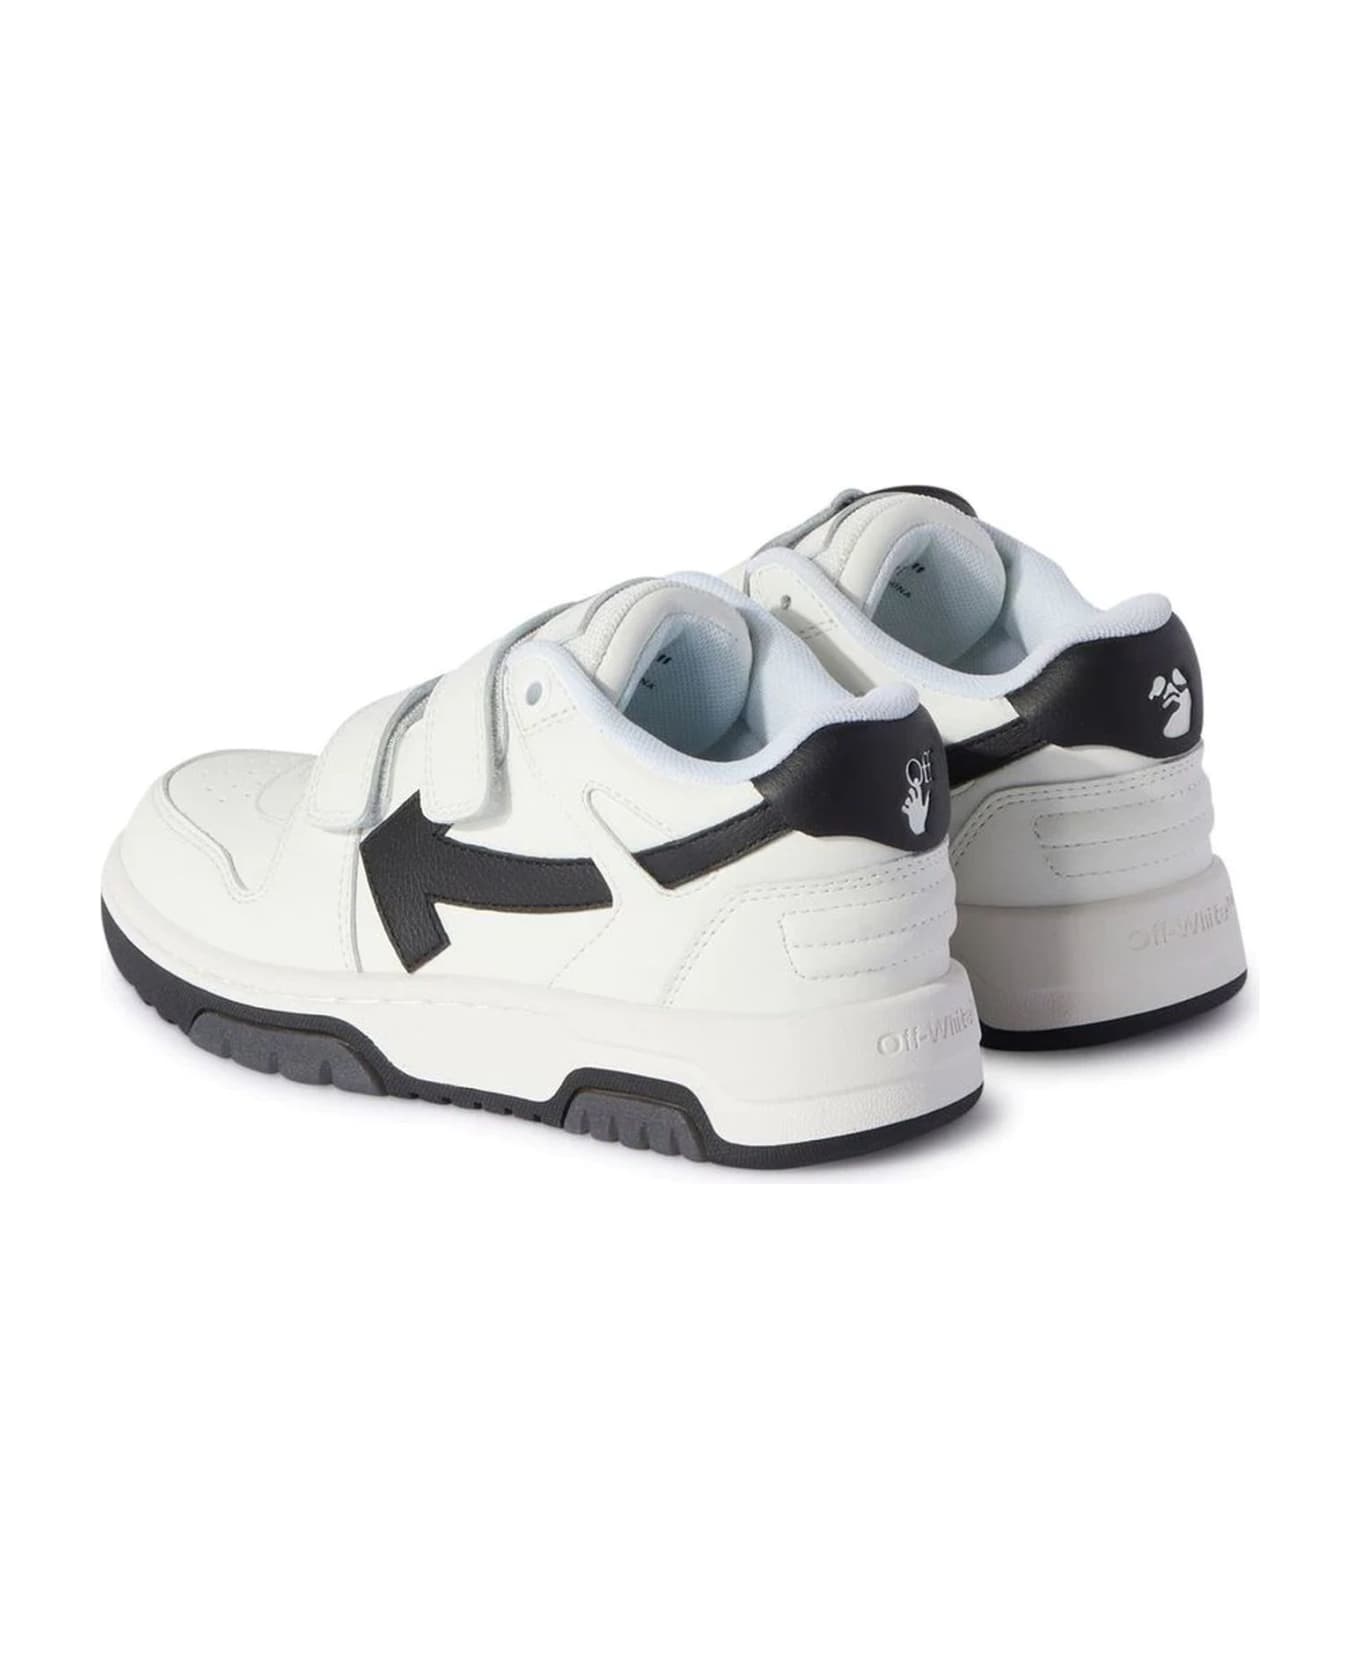 Off-White White Leather Sneakers - Bianco+nero